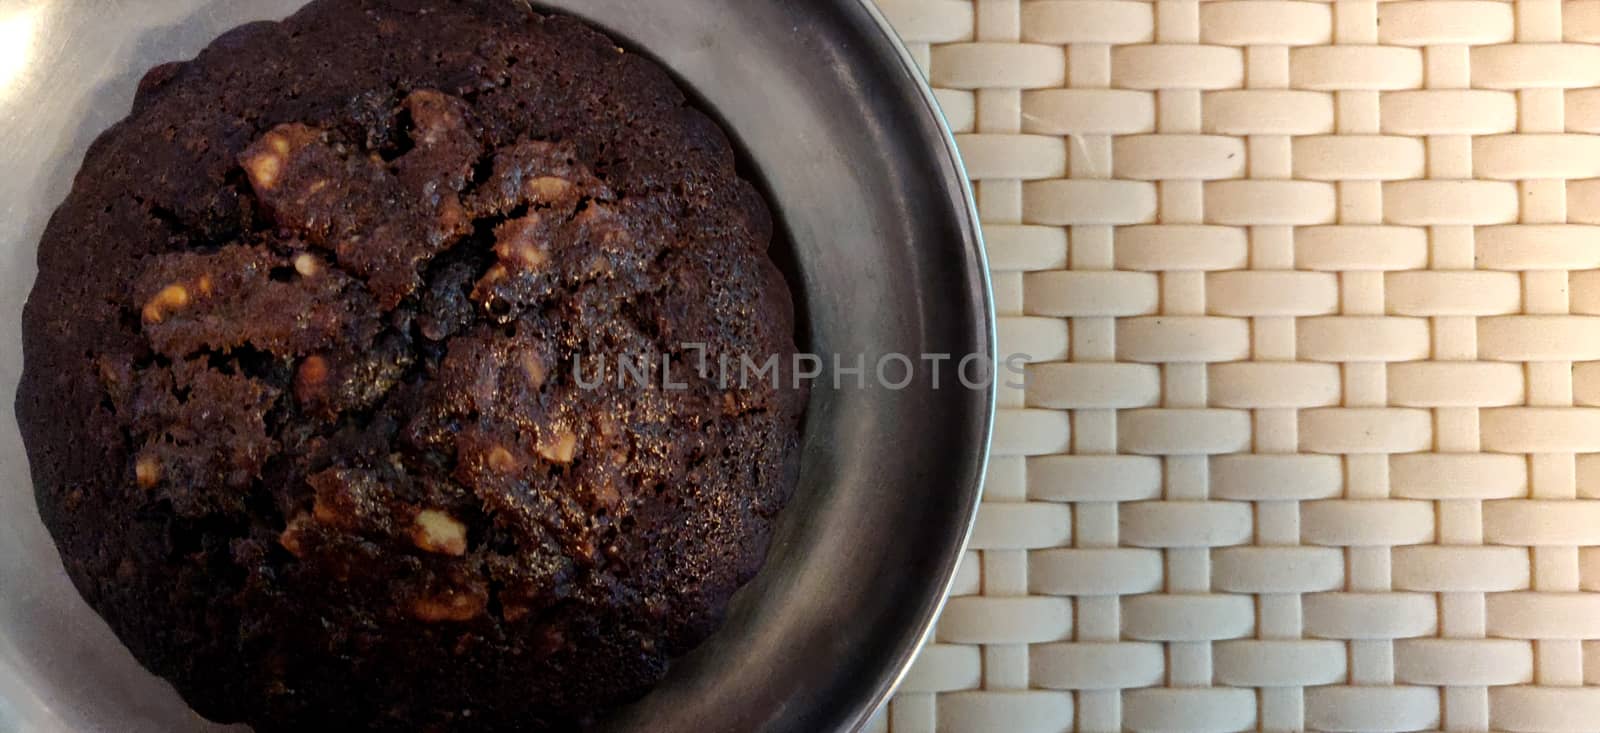 Chocolate walnut muffin on a steel plate by mshivangi92